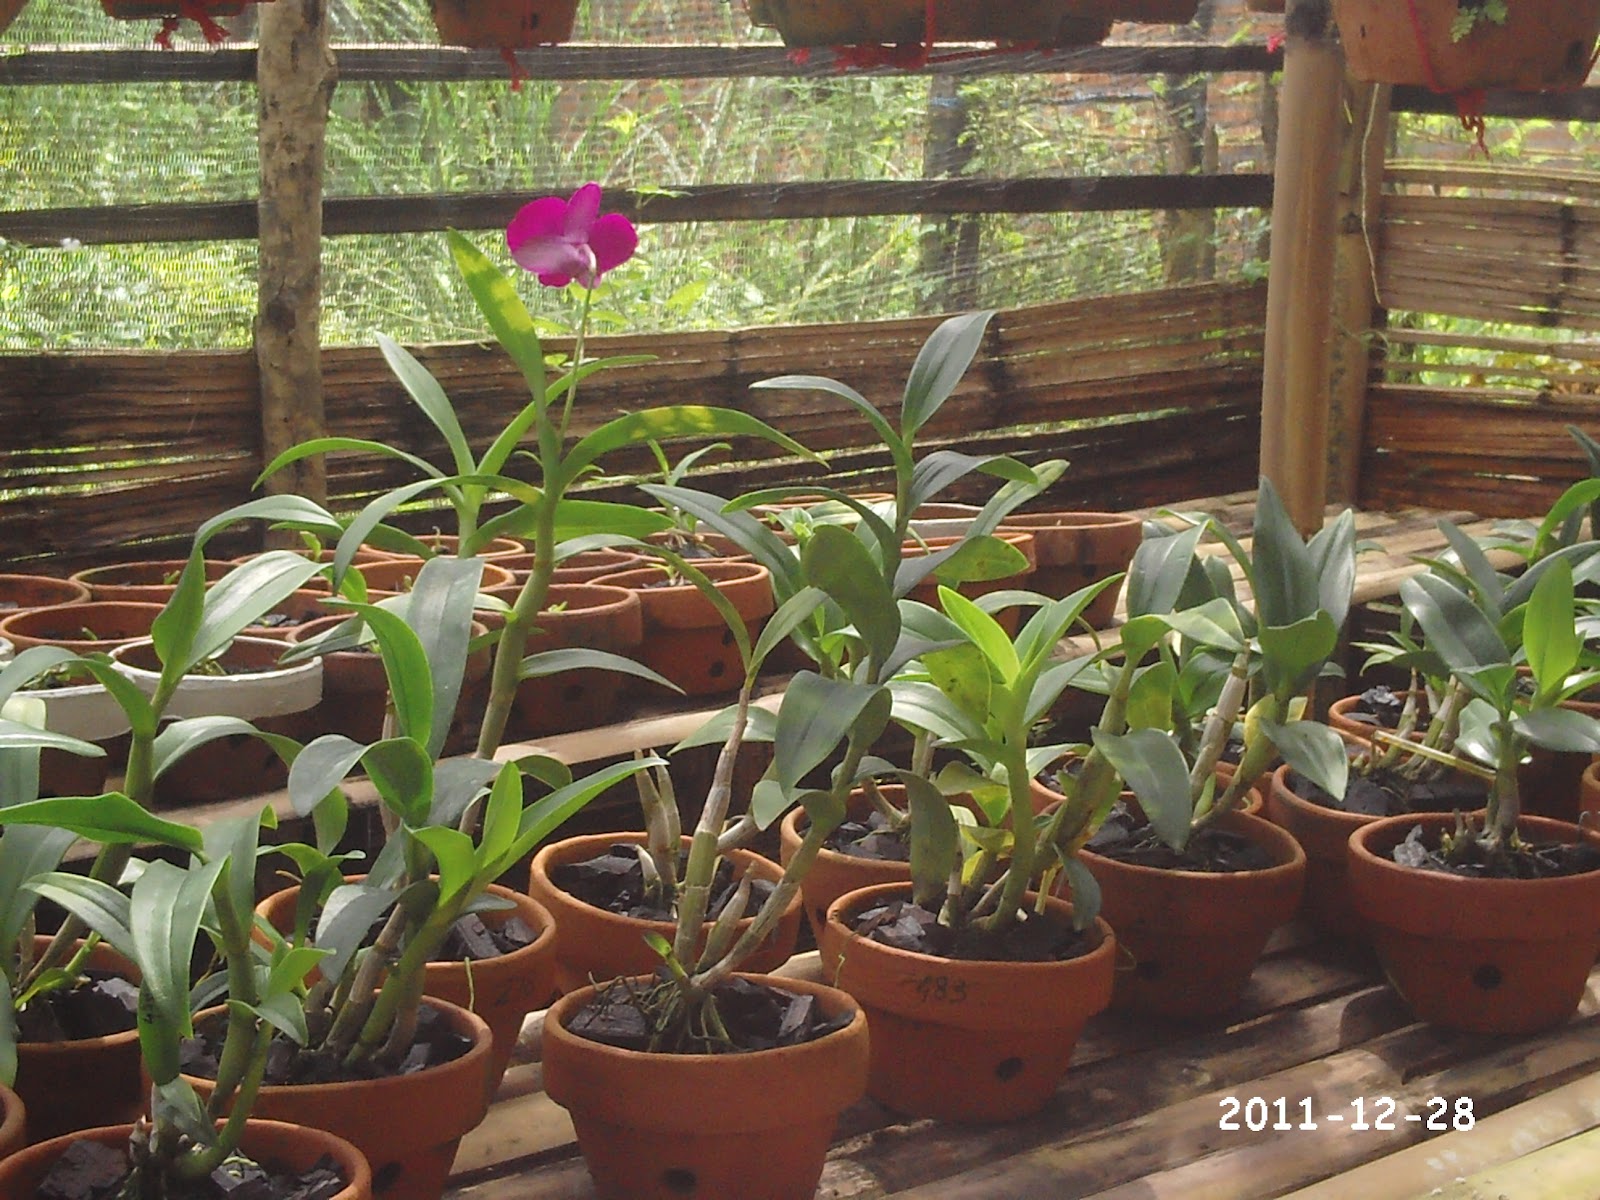 Rumah Bunga Kuansing: Aneka Tanaman Anggrek